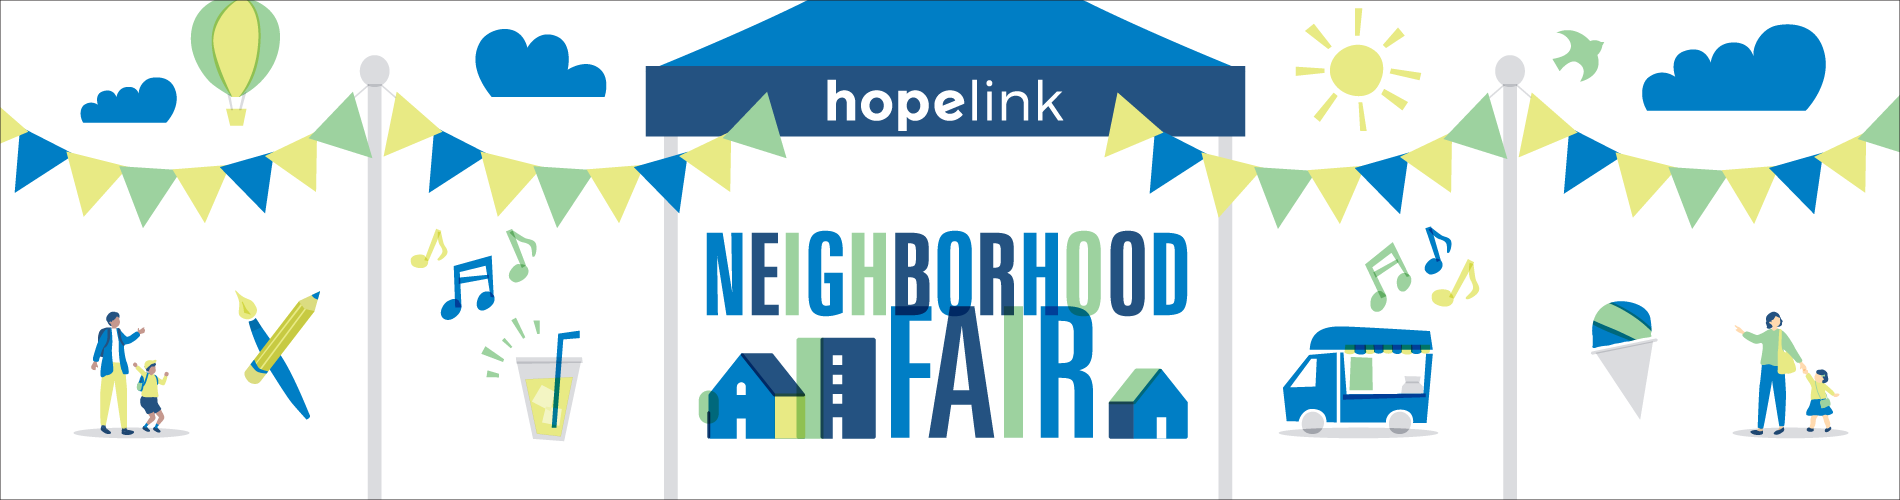 Hopelink Neighborhood Fair